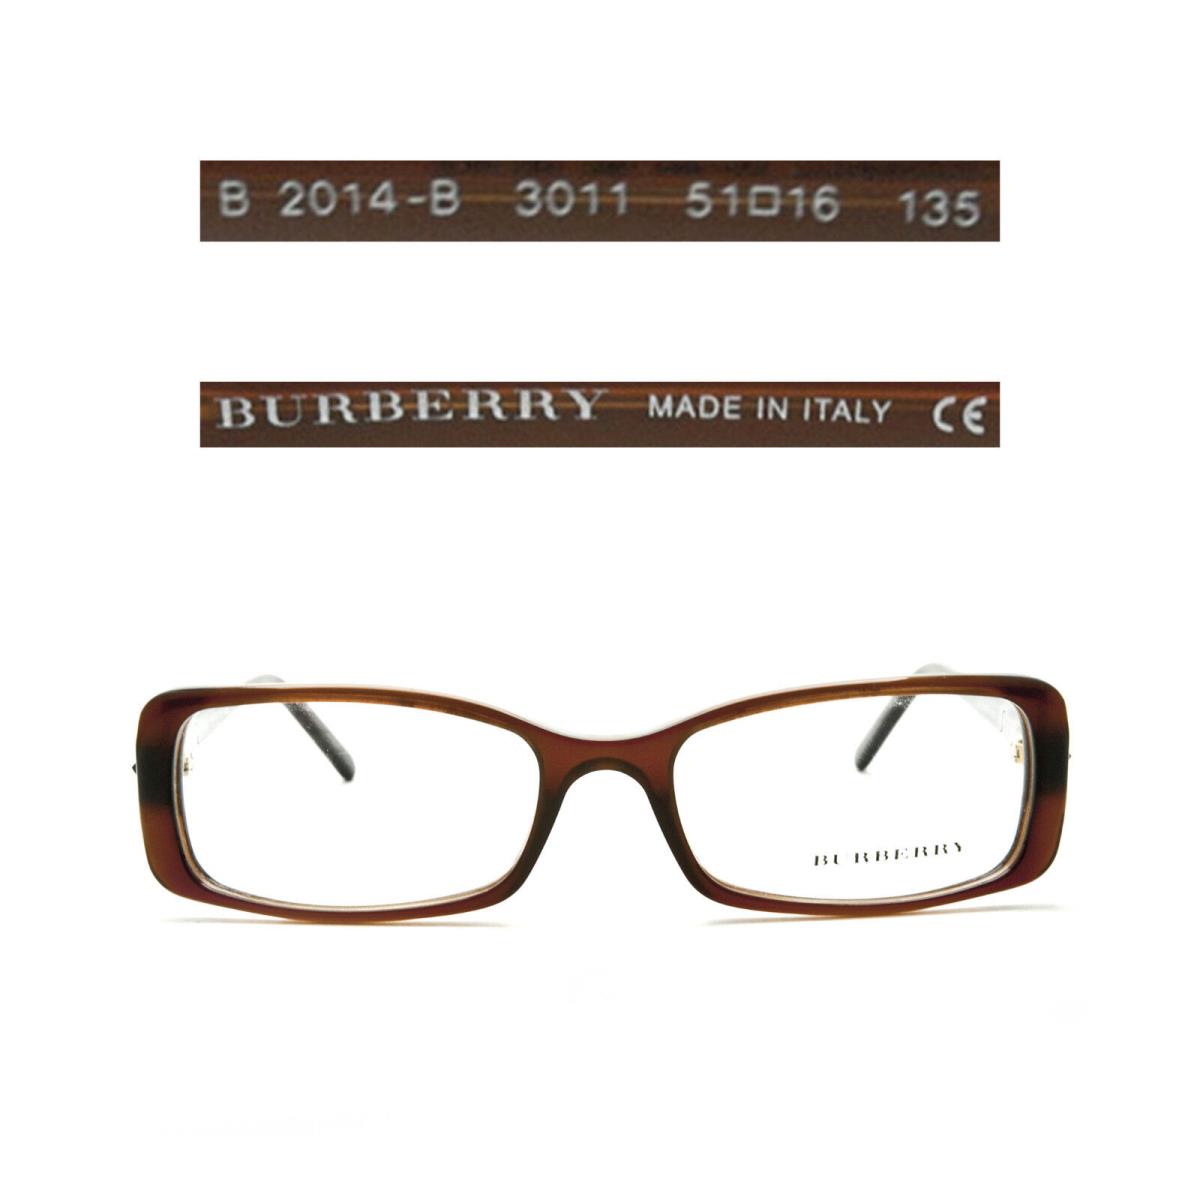 Burberry B 2014-B 3011 Eyeglasses - Made in Italy